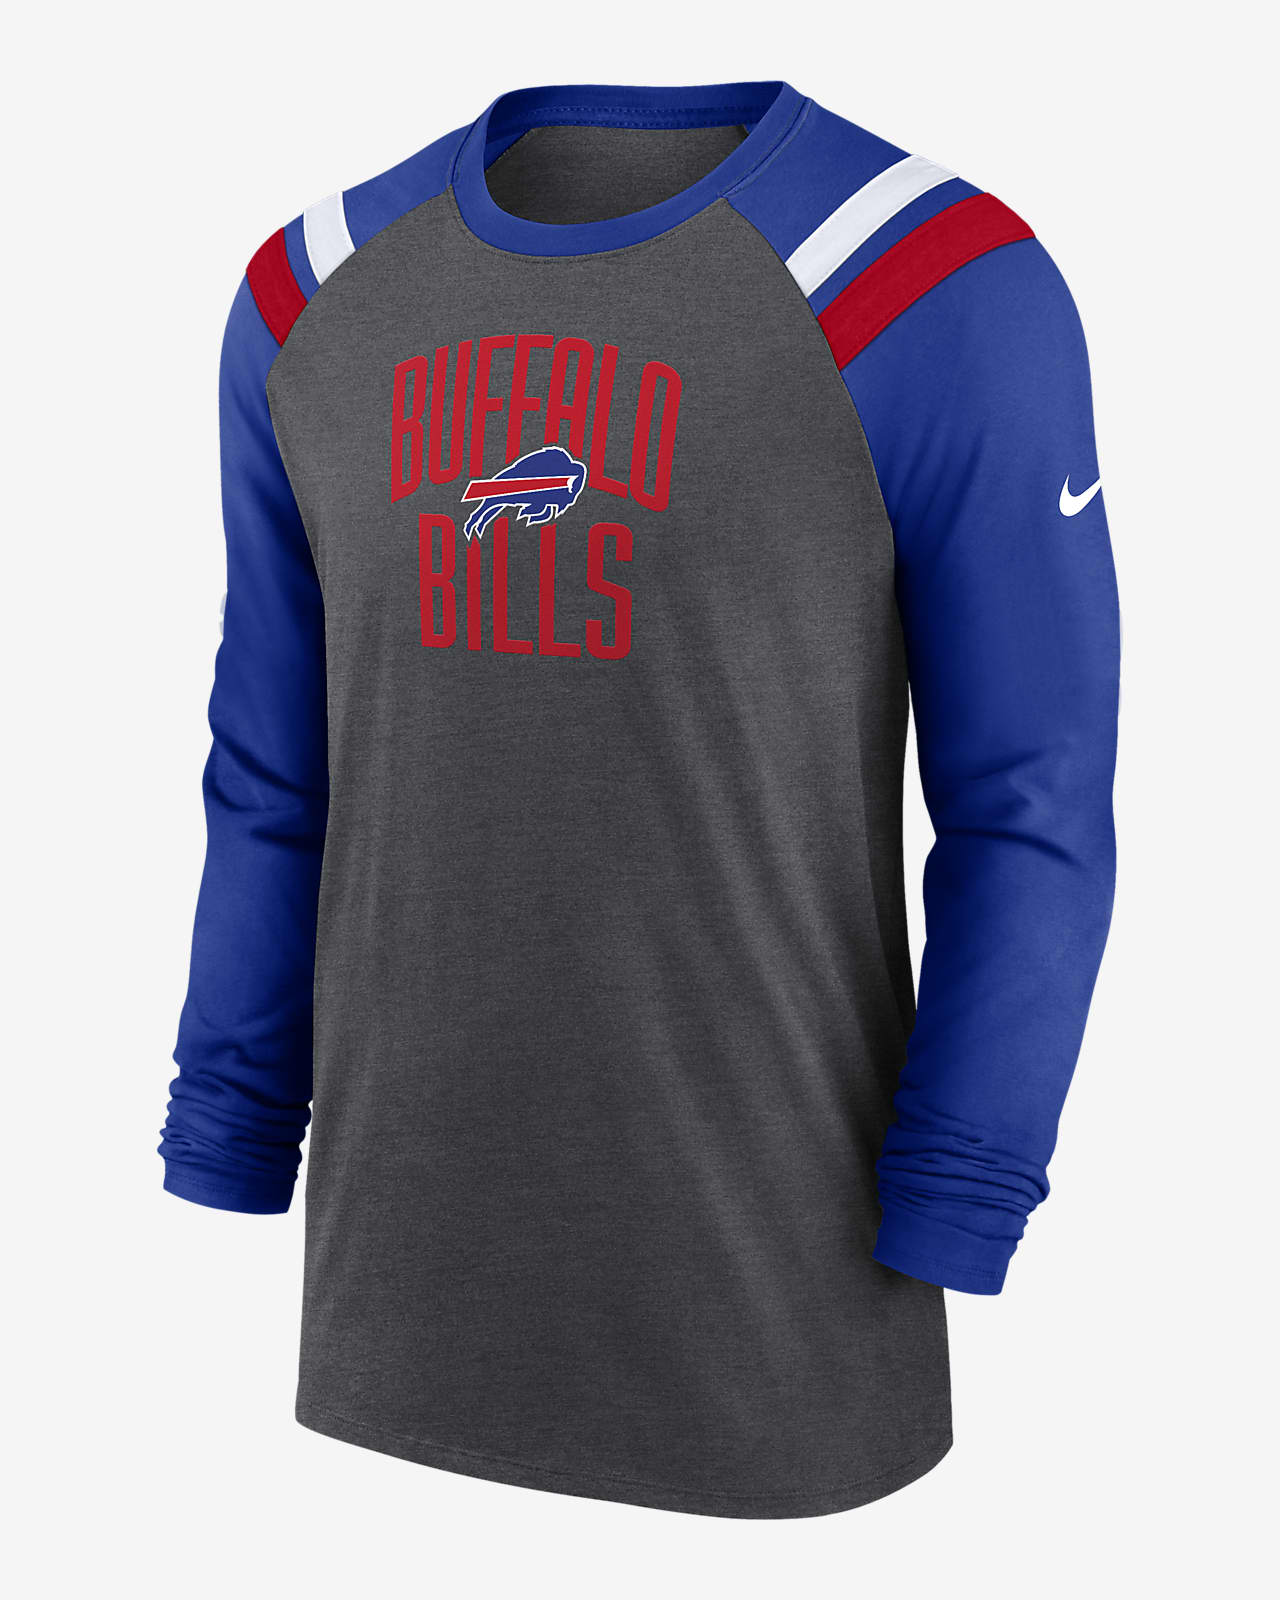 Nike Athletic Fashion (NFL Buffalo Bills) Men's Long-Sleeve T-Shirt